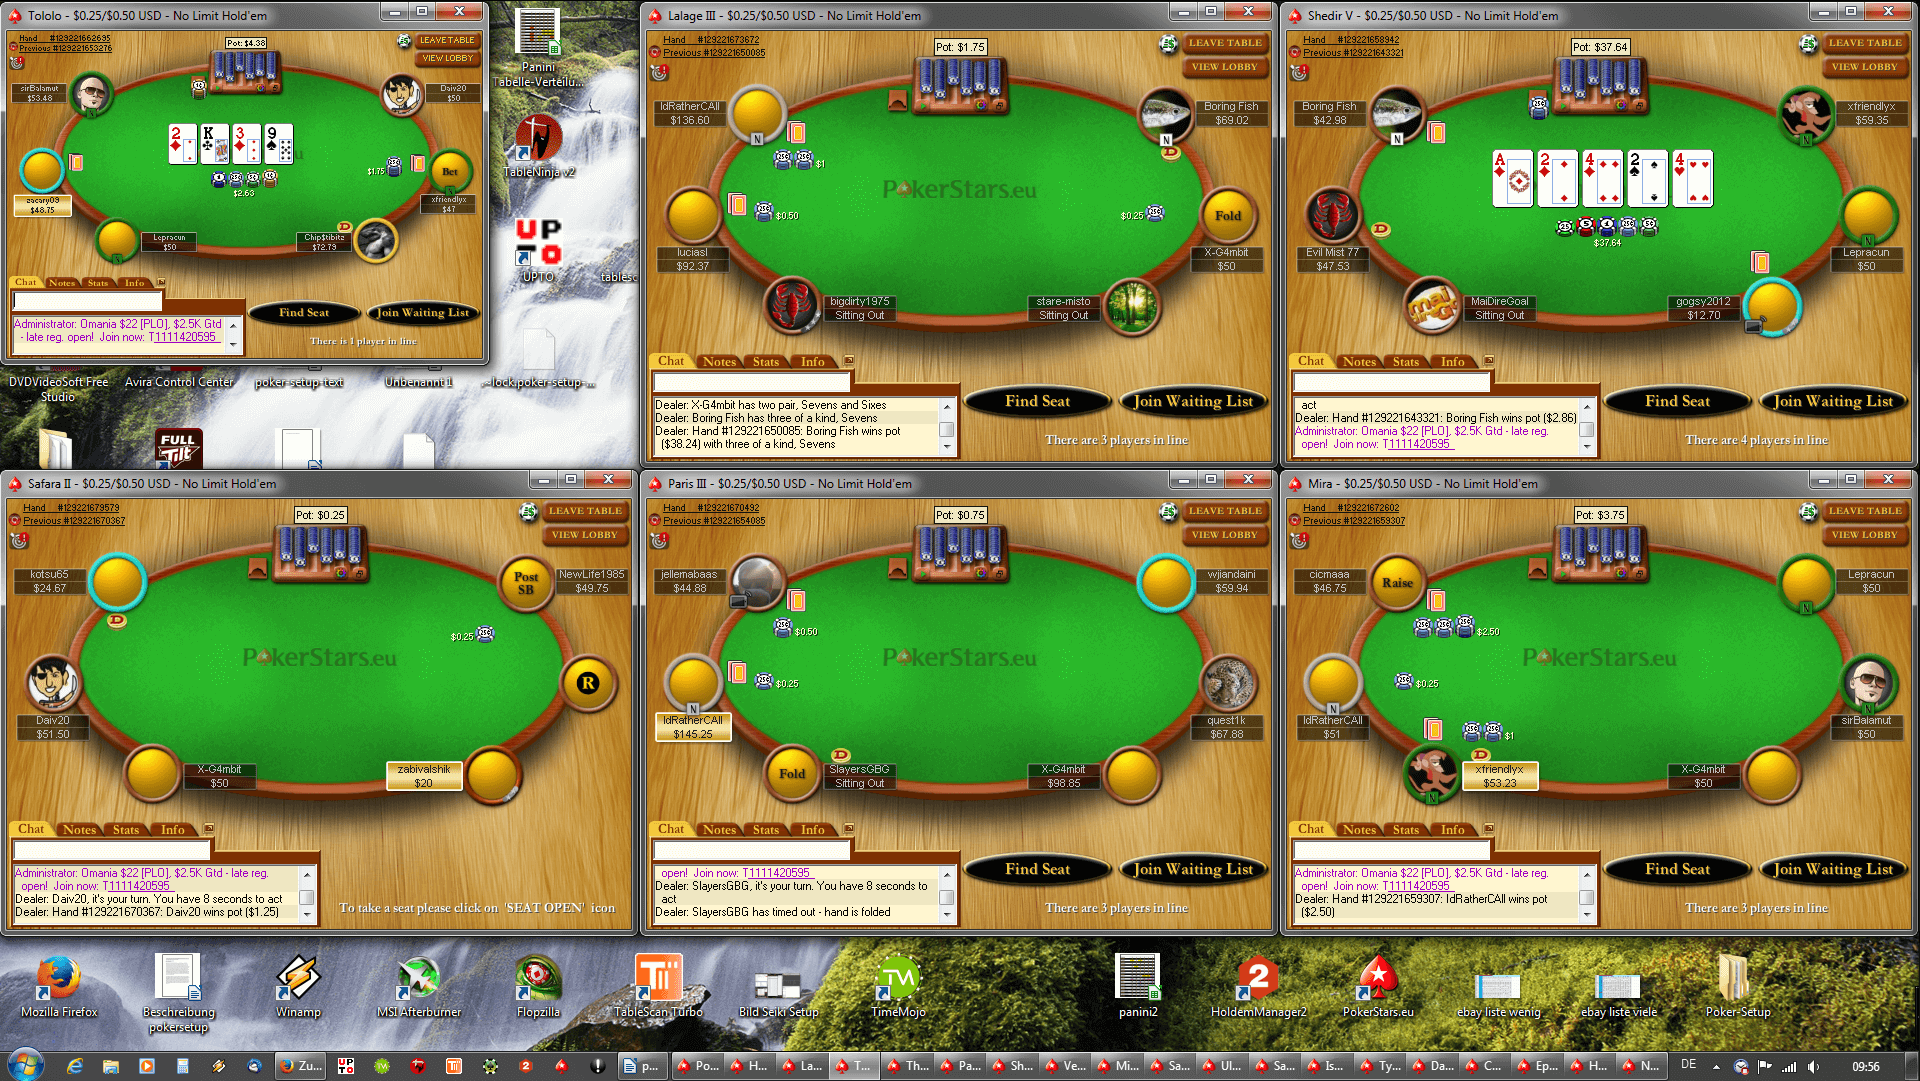 Tischanordnung Poker - FullHD(3x2)